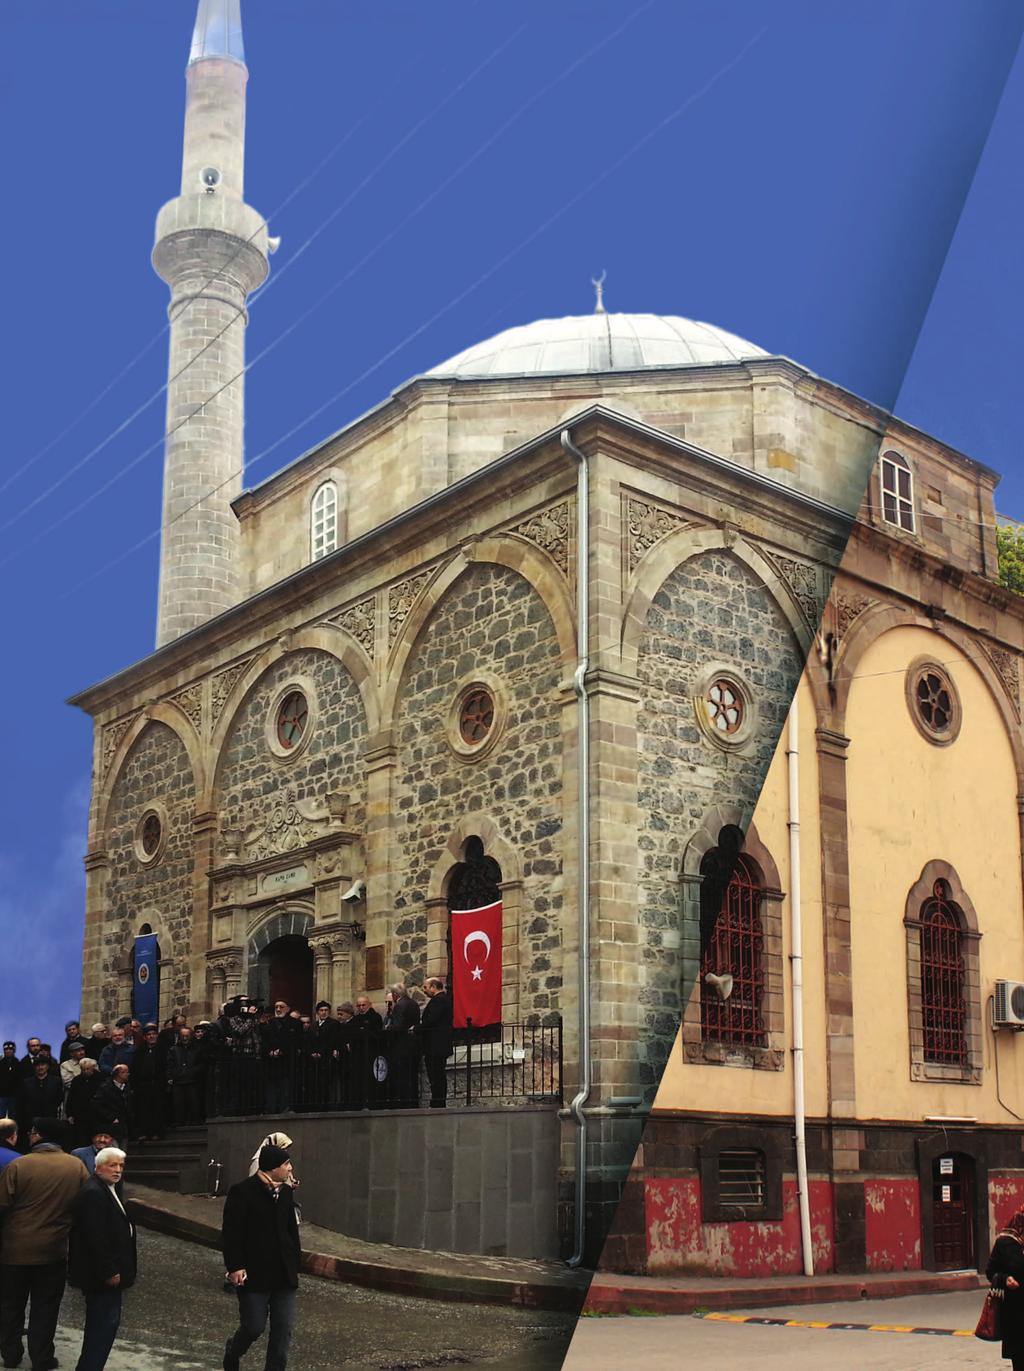 Giresun İl Merkezinde Restore Edilen Vakıf Camileri The Foundational Mosques Restored in Central Giresun GİRESUN İL MERKEZİNDE RESTORE EDİLEN VAKIF CAMİLERİ THE